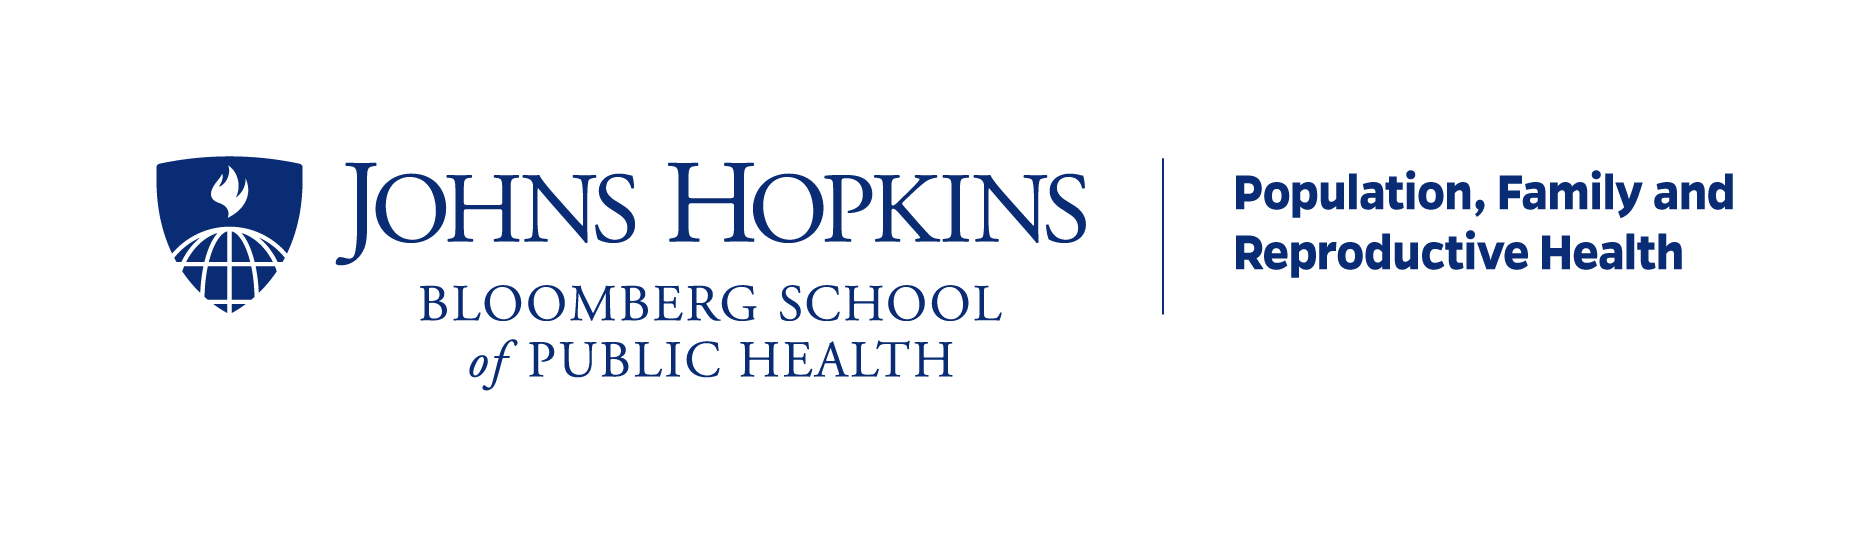 Bloomberg School of Public Health logo horizontal blue